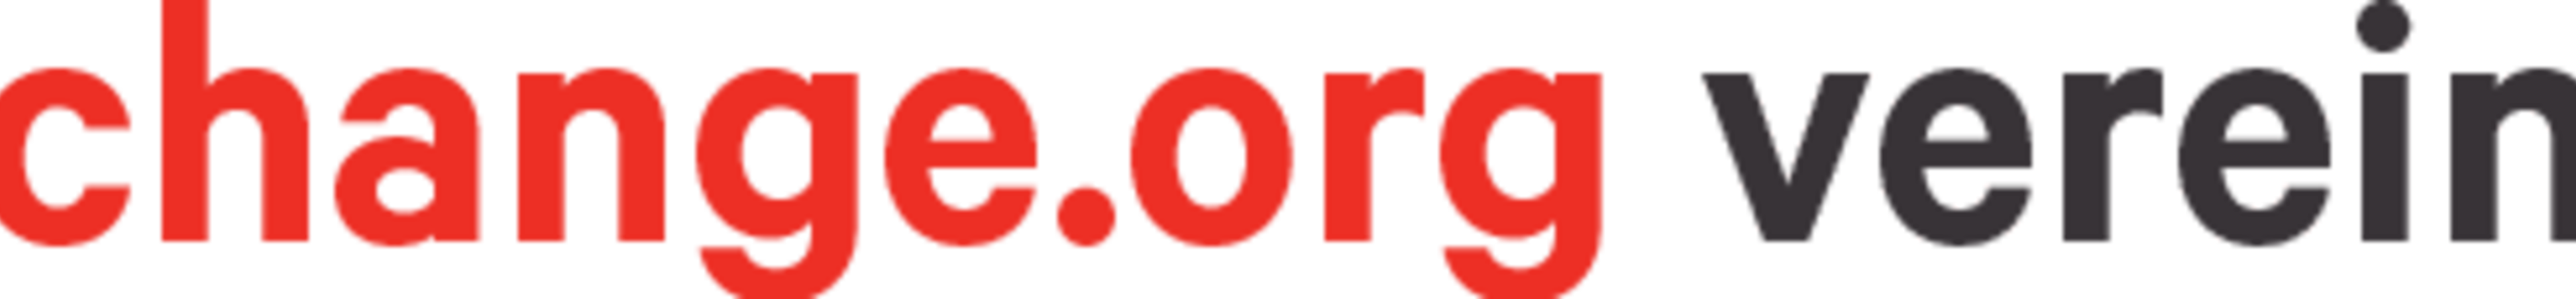 Change.org logo